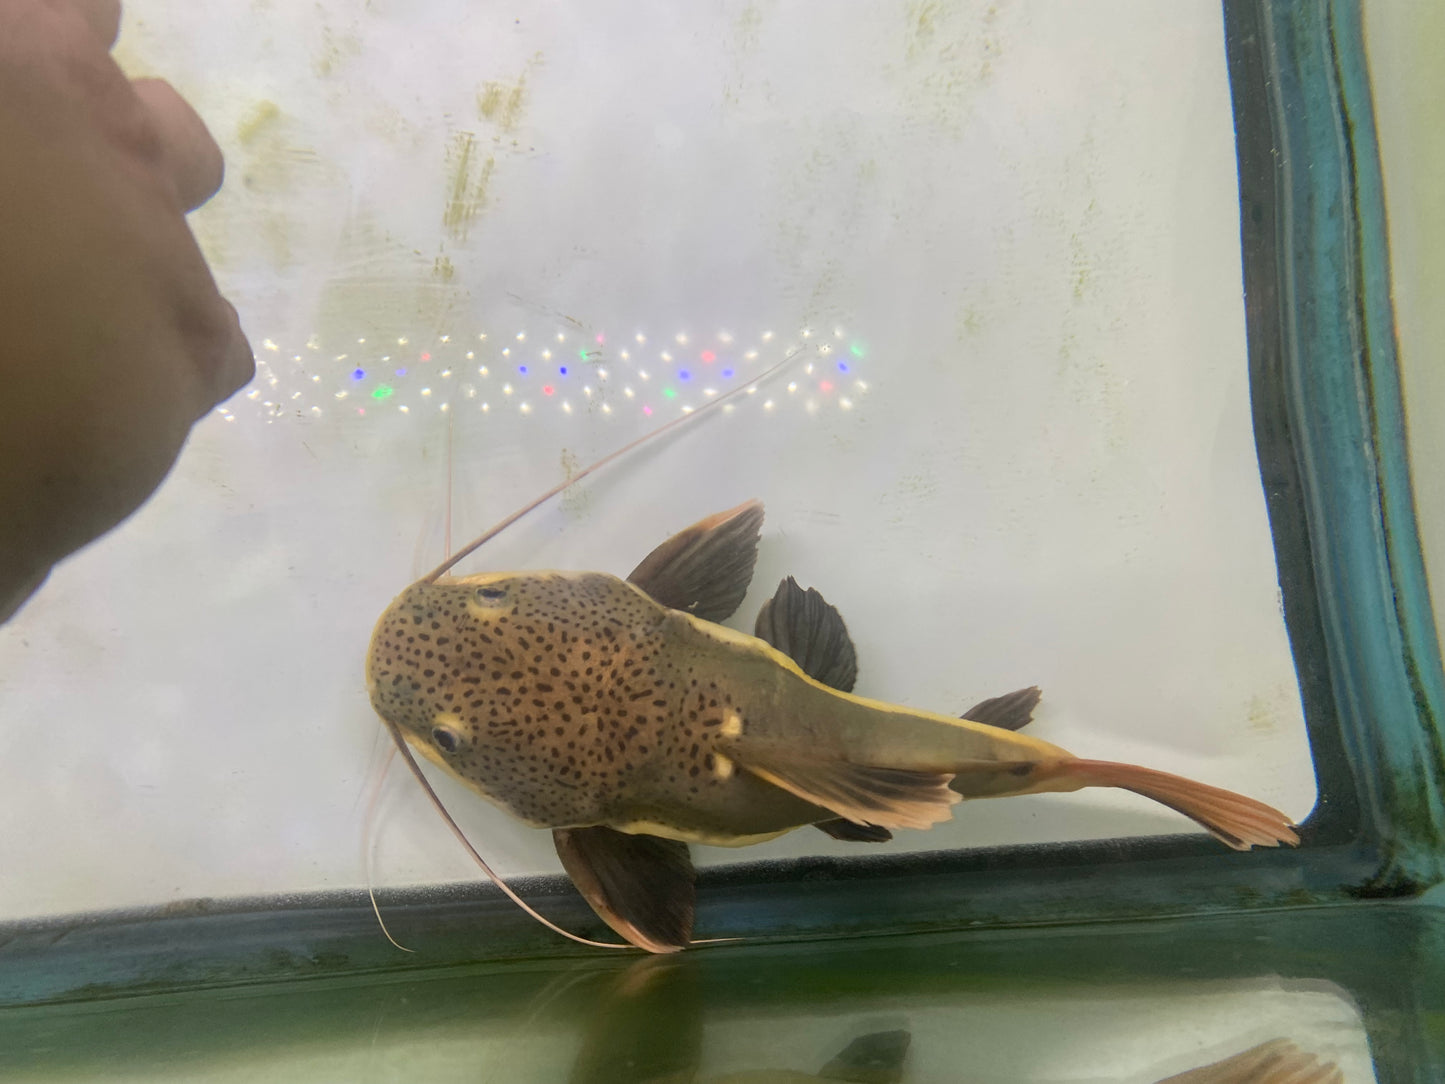 Shortbody Redtail Catfish 8-9"